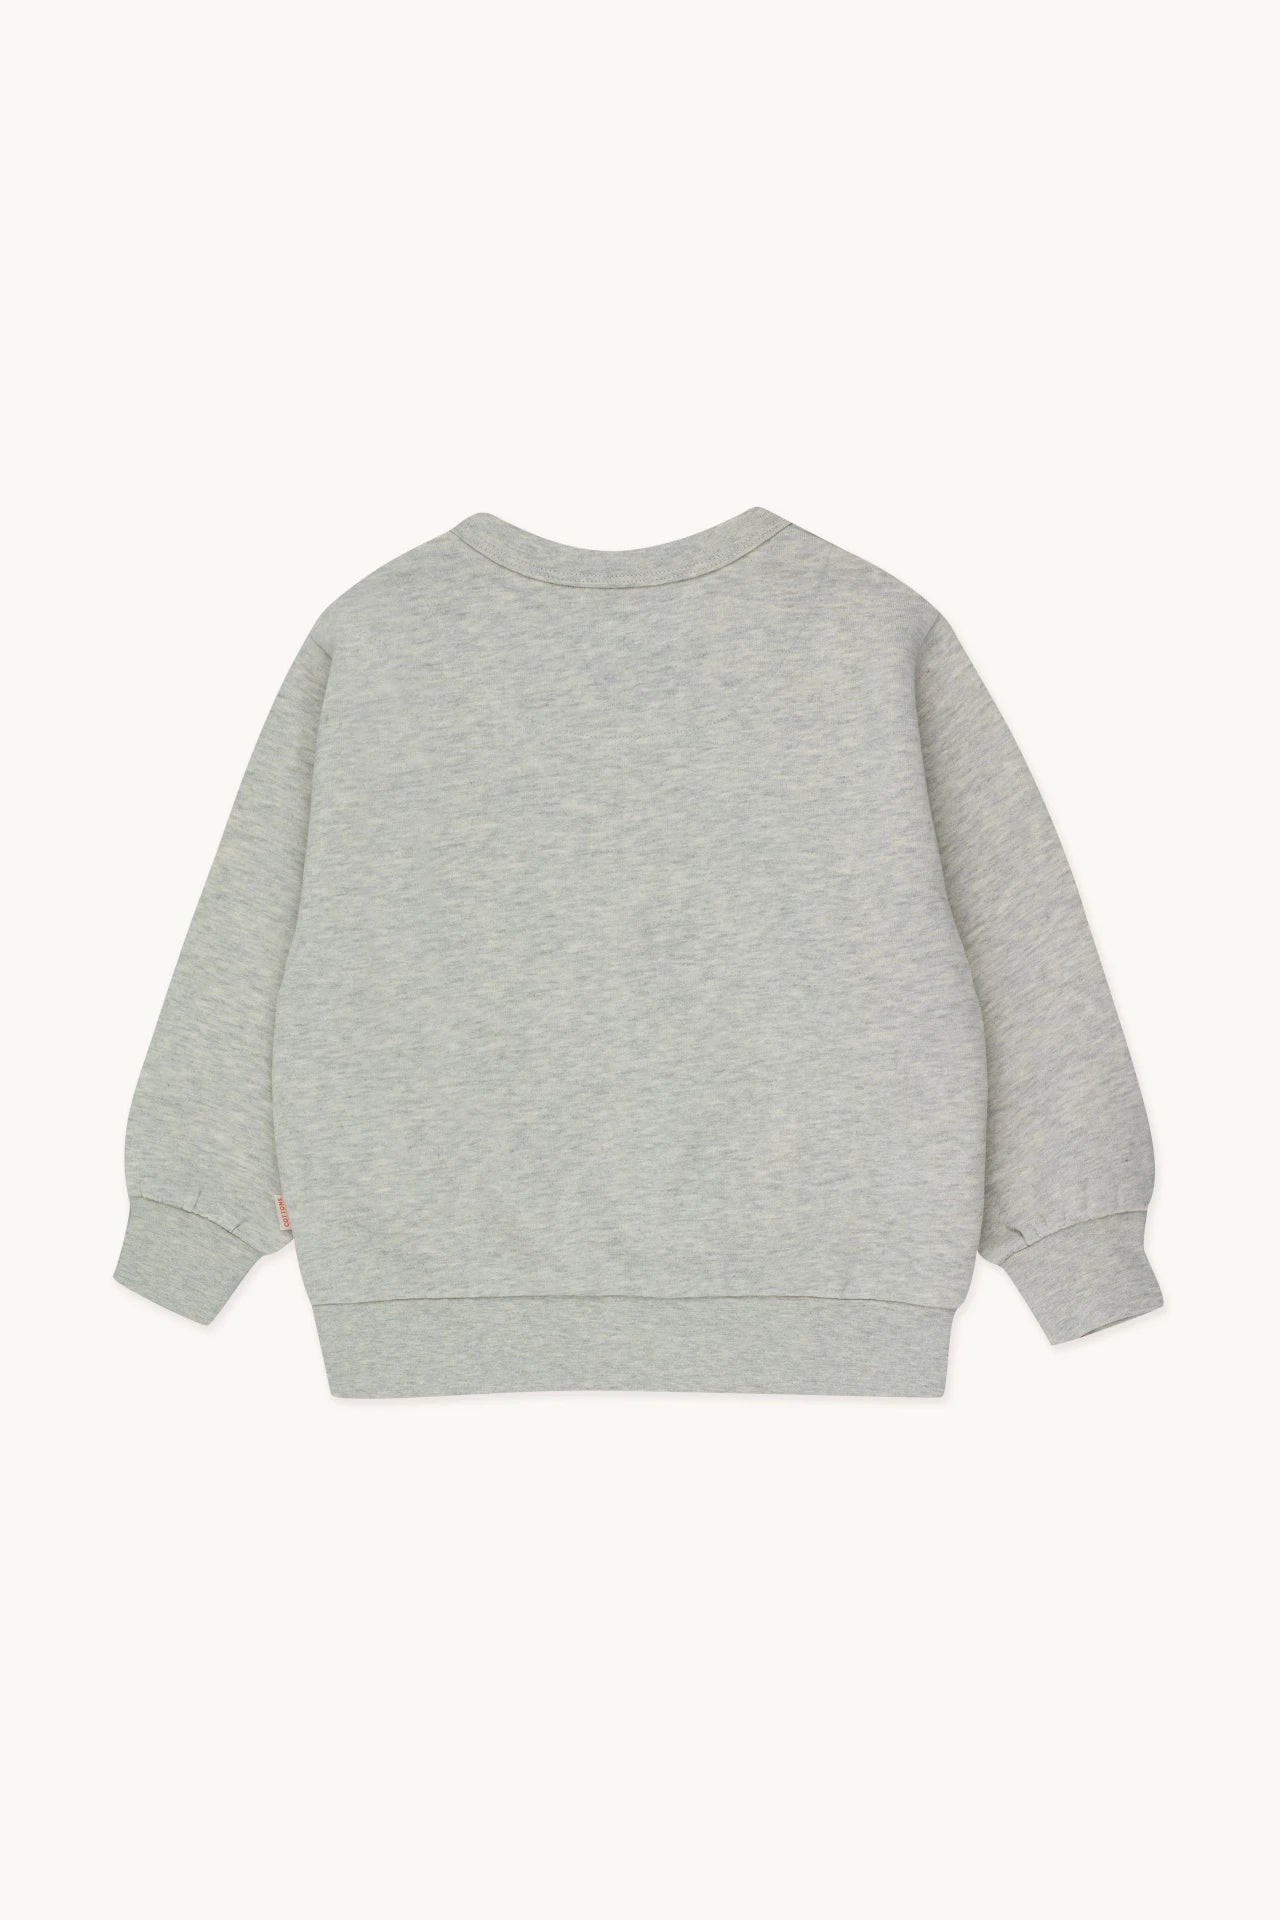 Tiny Cottons Chamonix Poodles Sweatshirt - light grey heather